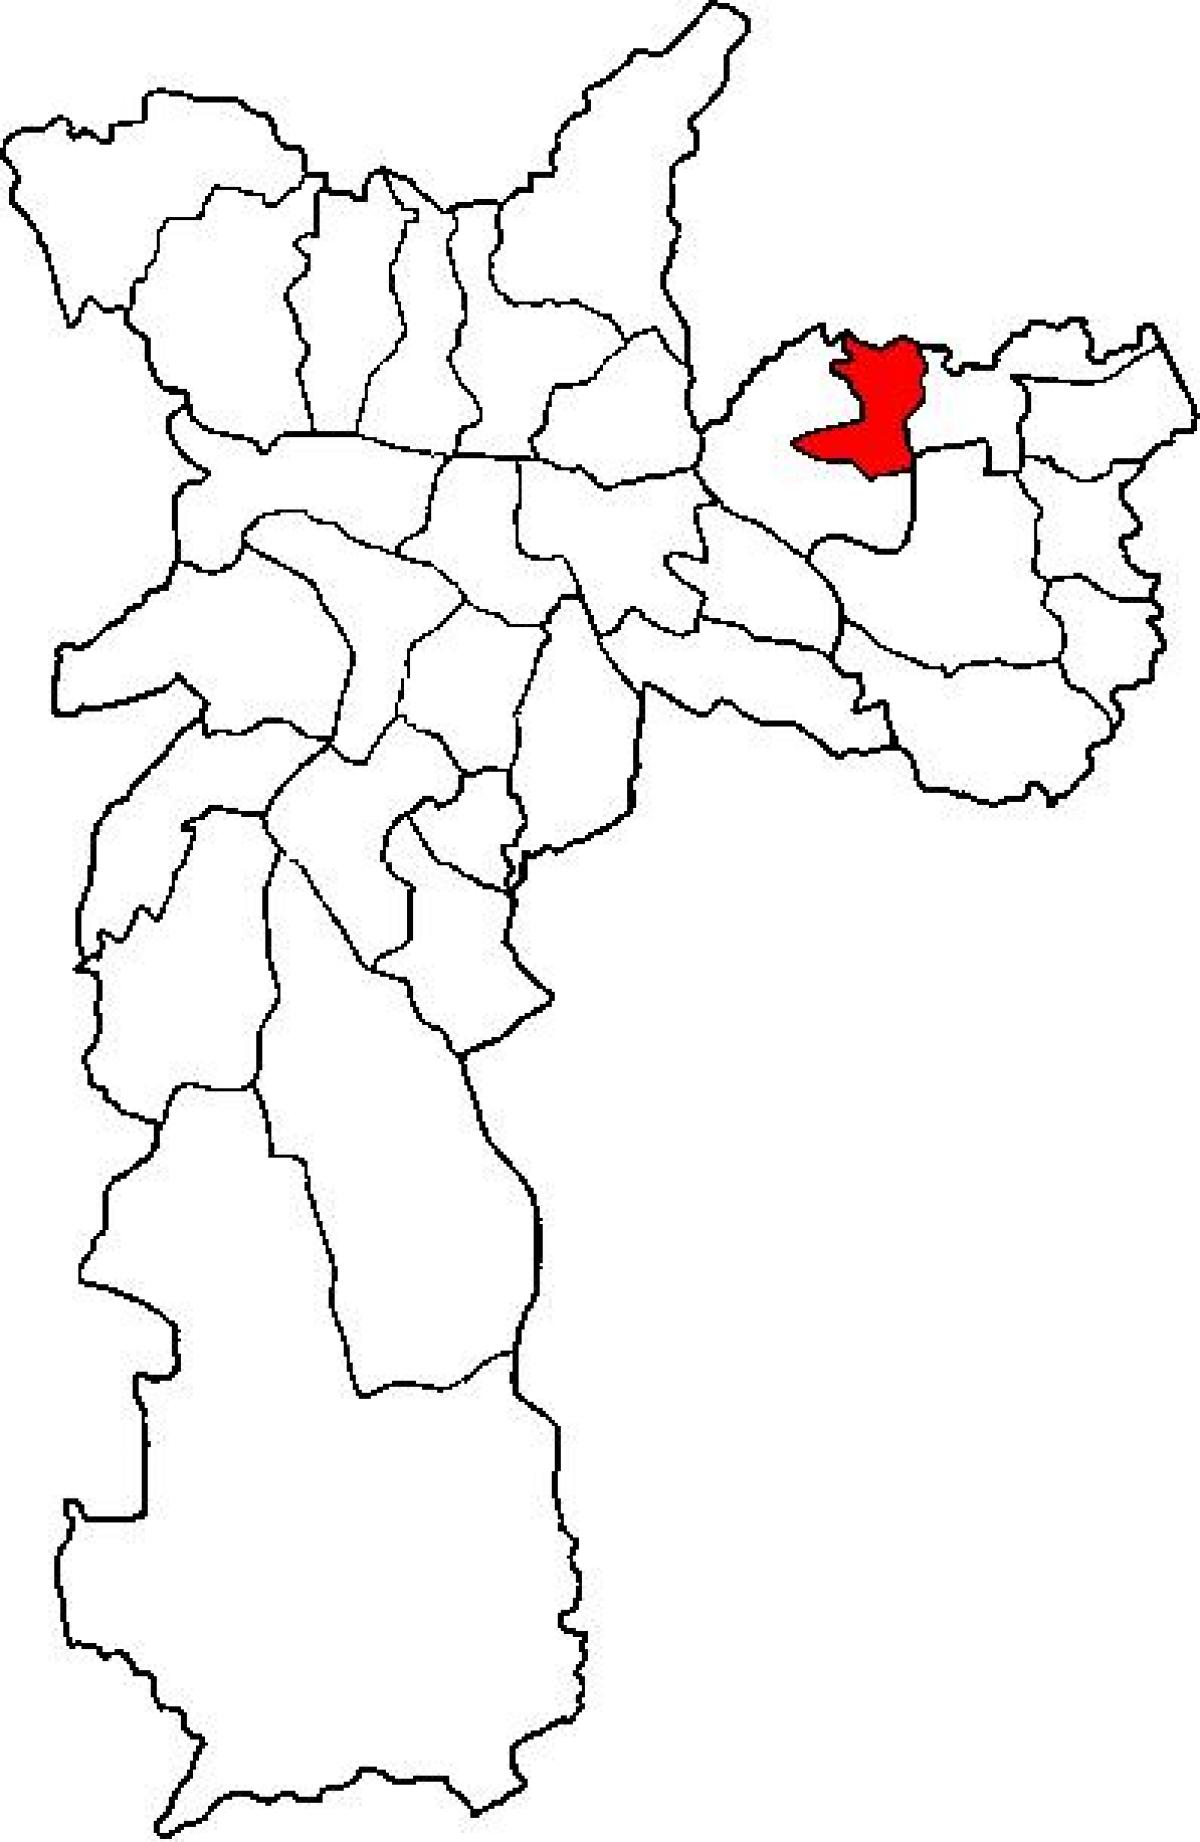 Kaart van Ermelino Matarazzo sub-prefektuur São Paulo